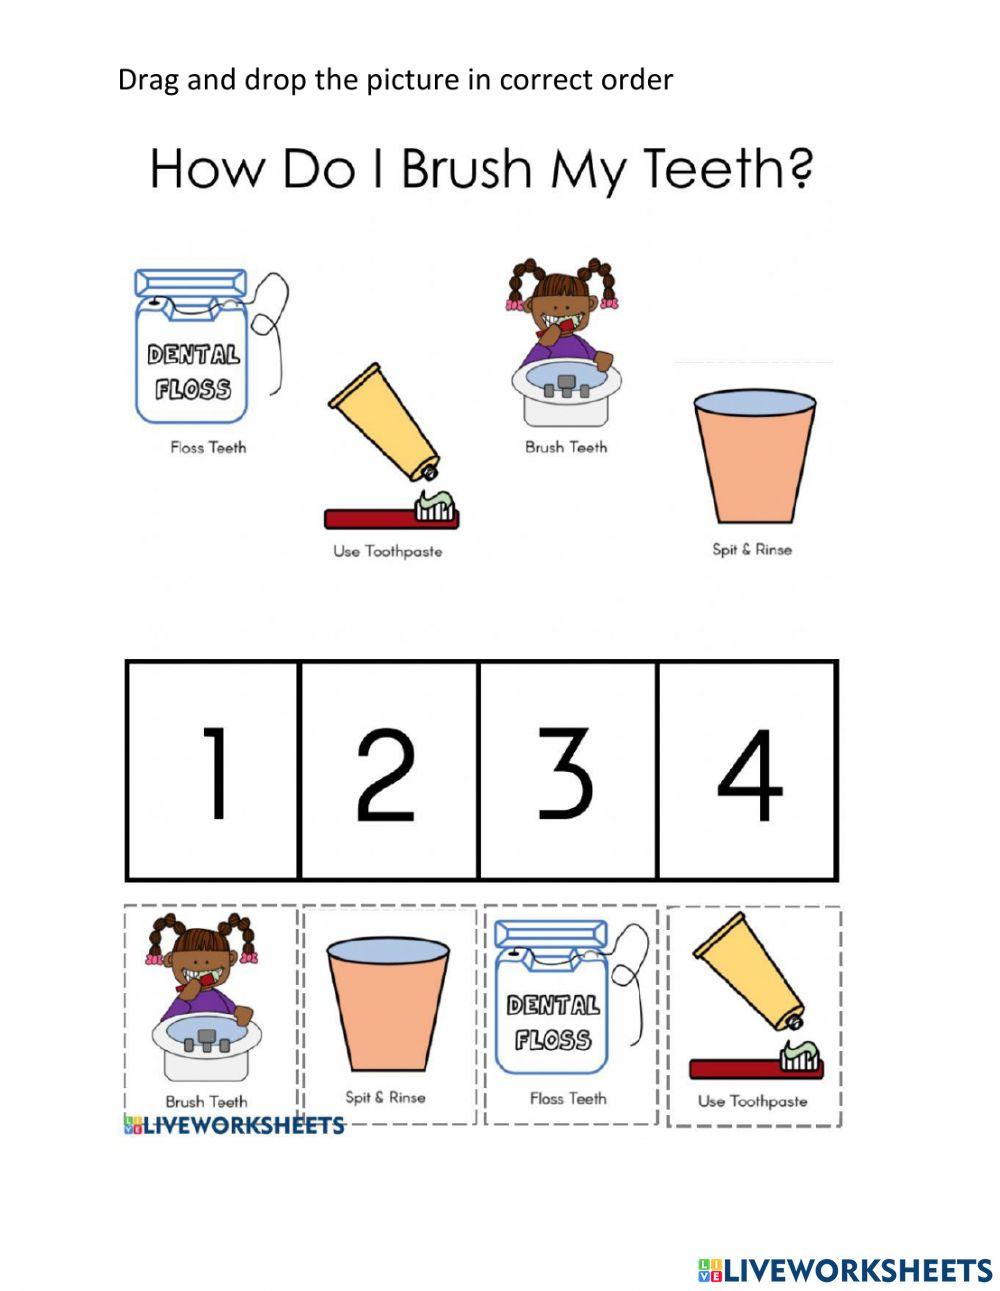 Correct order in brushing teeth